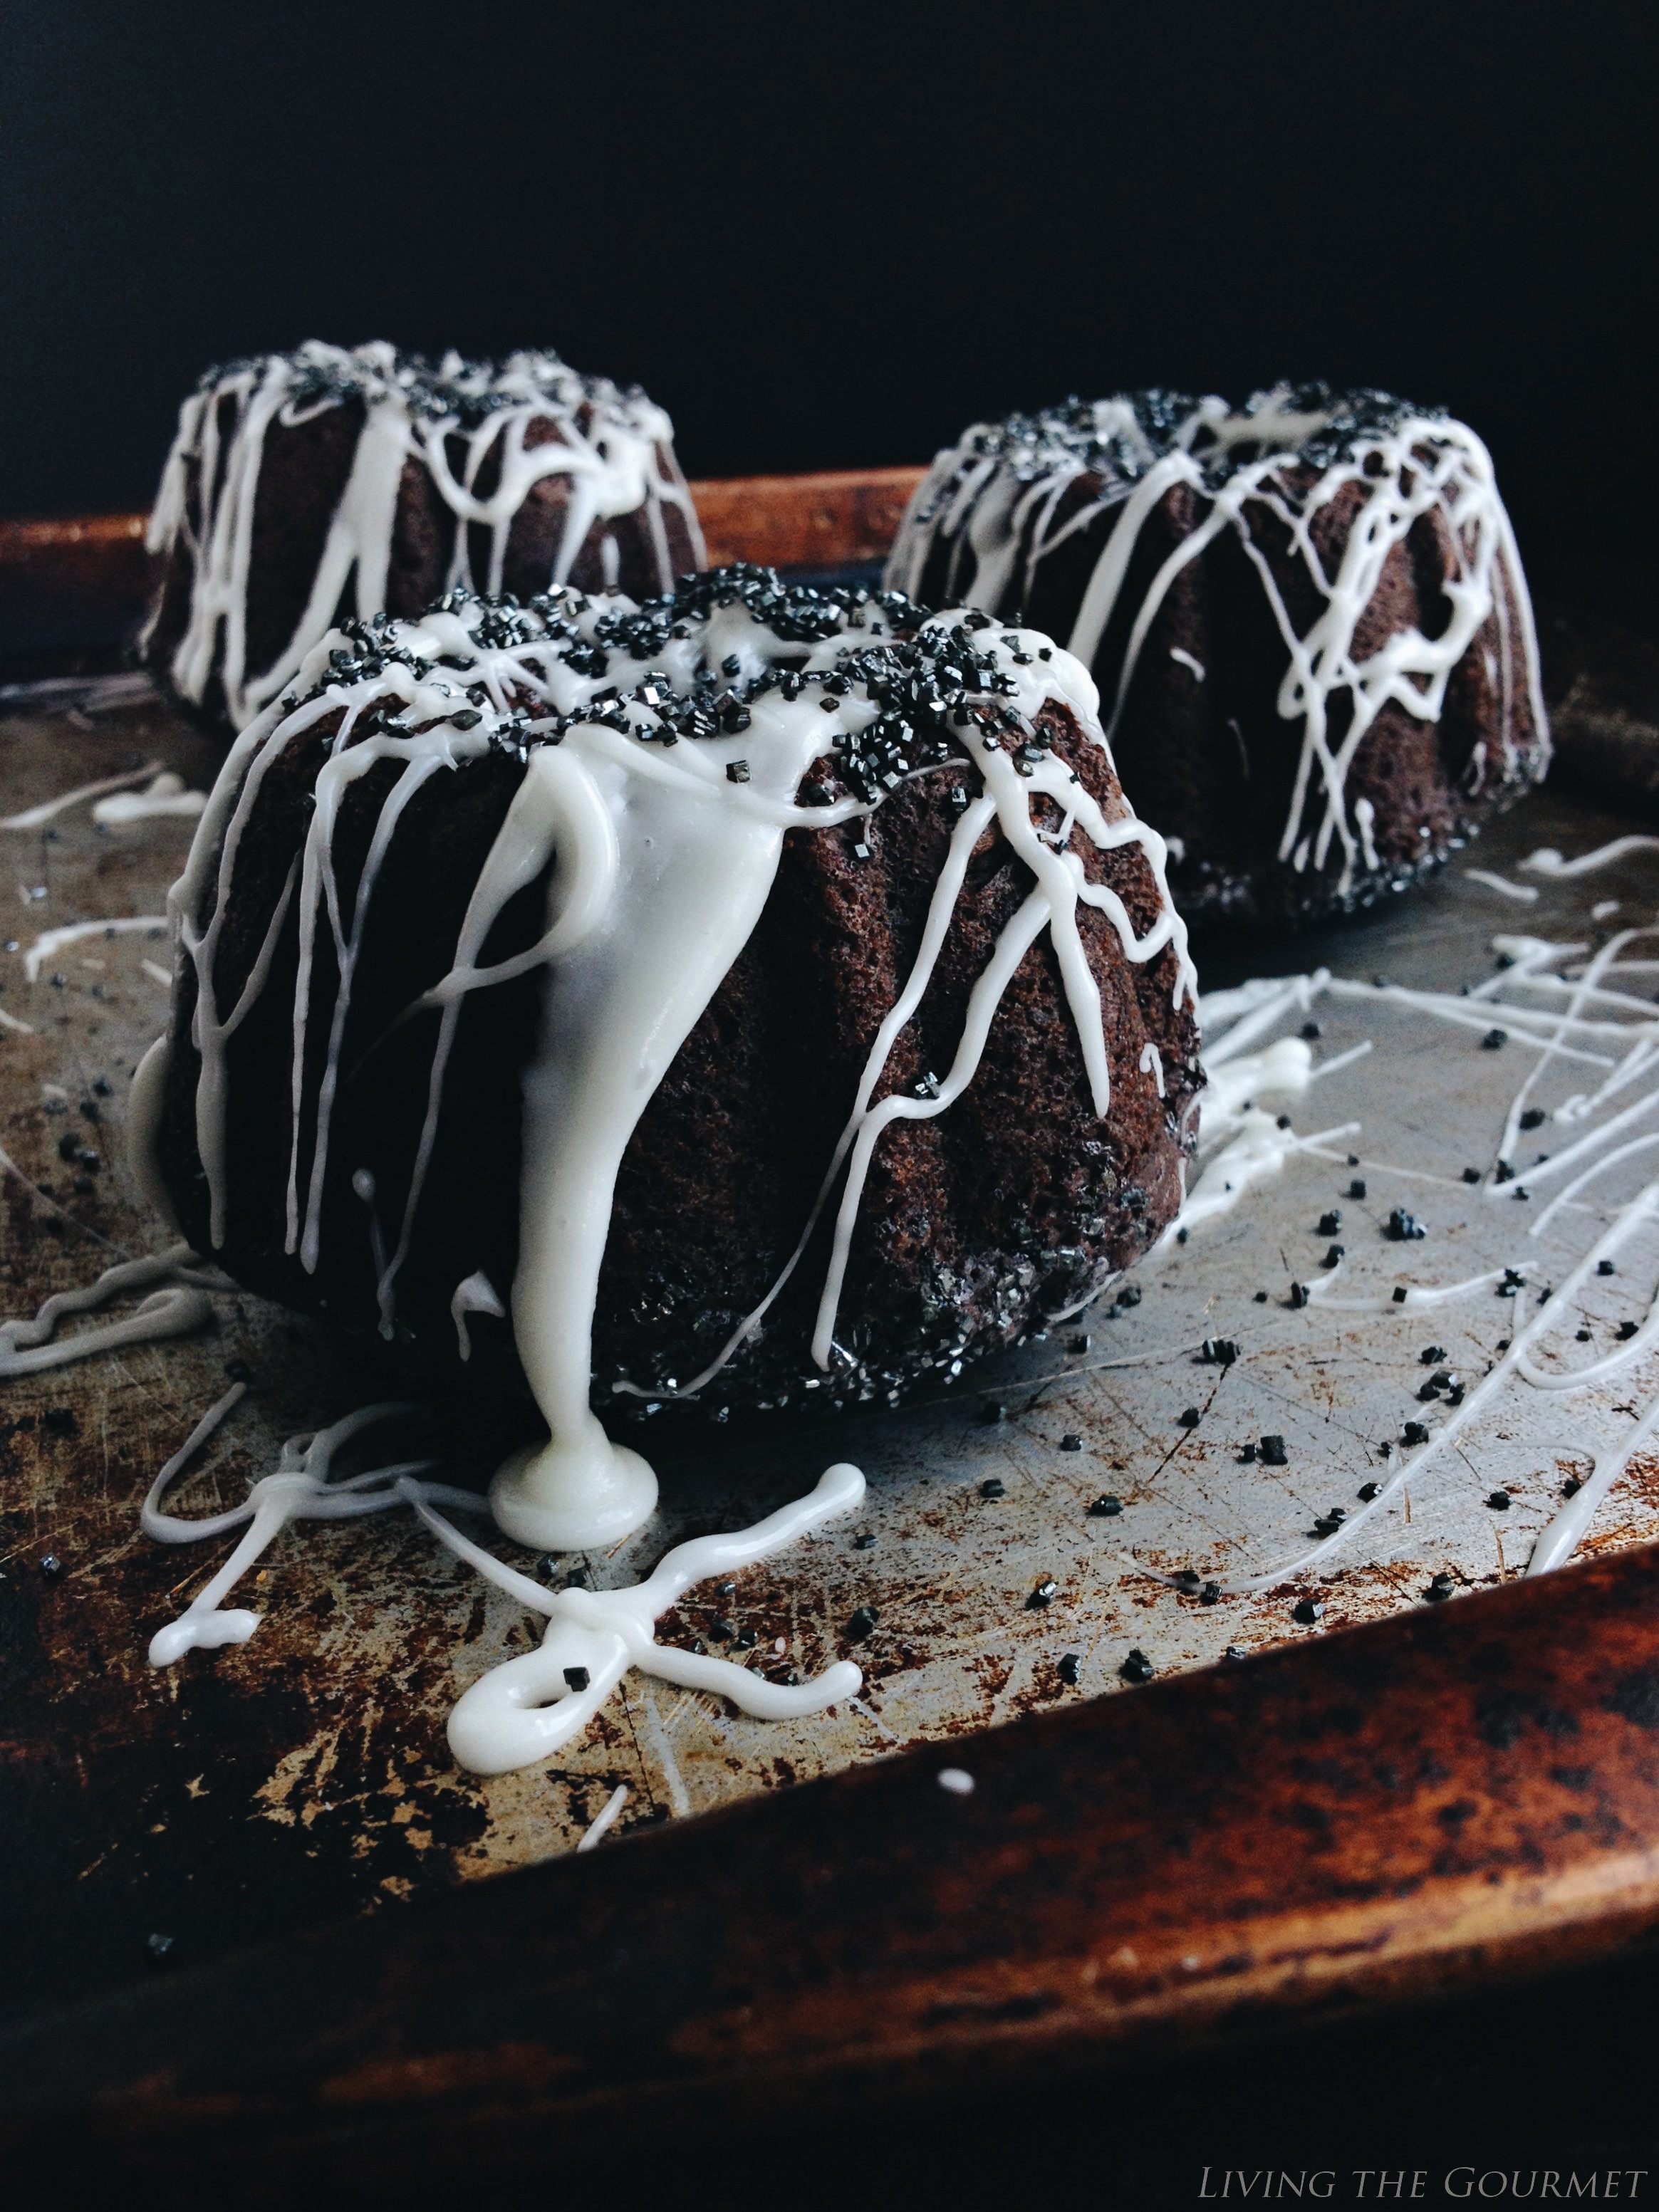 Living the Gourmet: Black Onyx Bundt Cake #BundtBakers